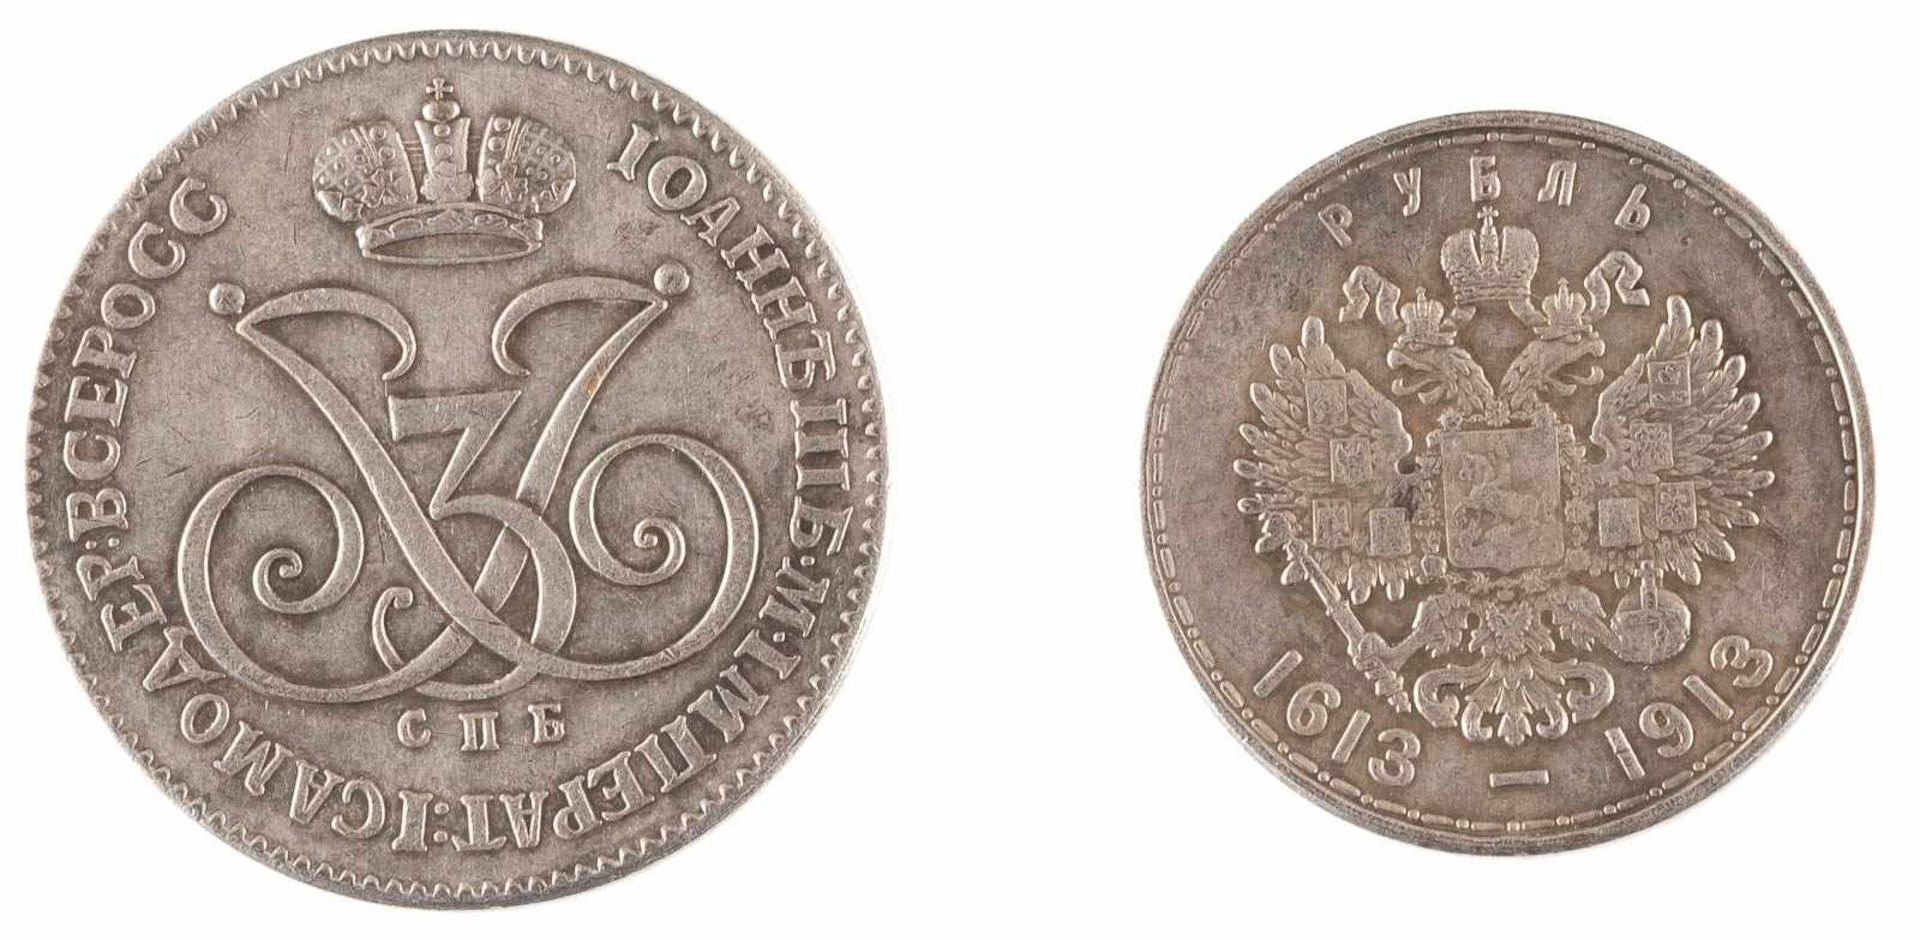 ZWEI RUBEL-MÜNZEN Russland, 1913 / Replik des Rubels unter Iwan VI. Silber. D. 40 mm / 34 mm, 40 g. - Bild 2 aus 2